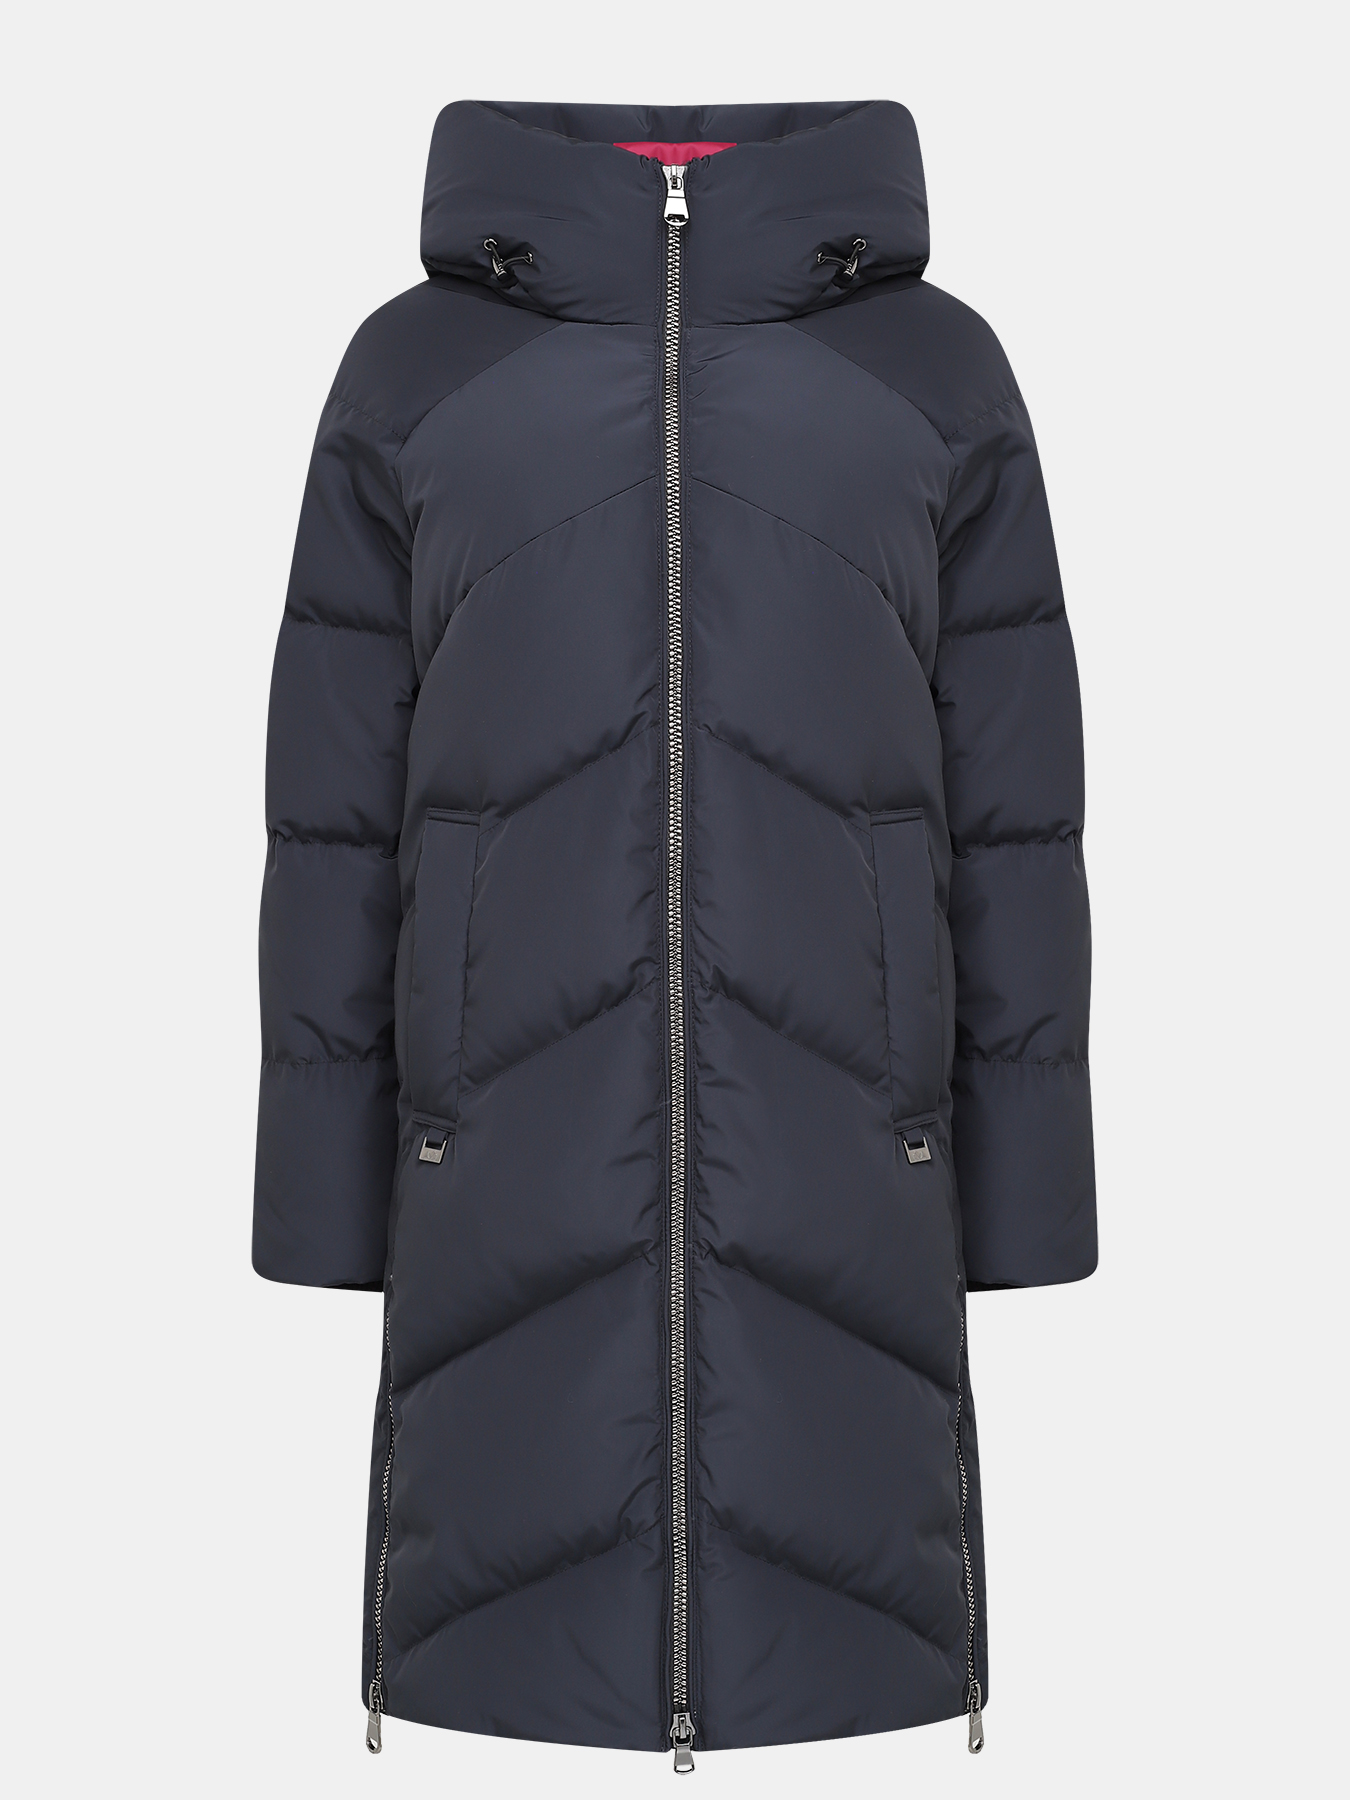 Пальто зимнее AVI 433610-021, цвет темно-синий, размер 46